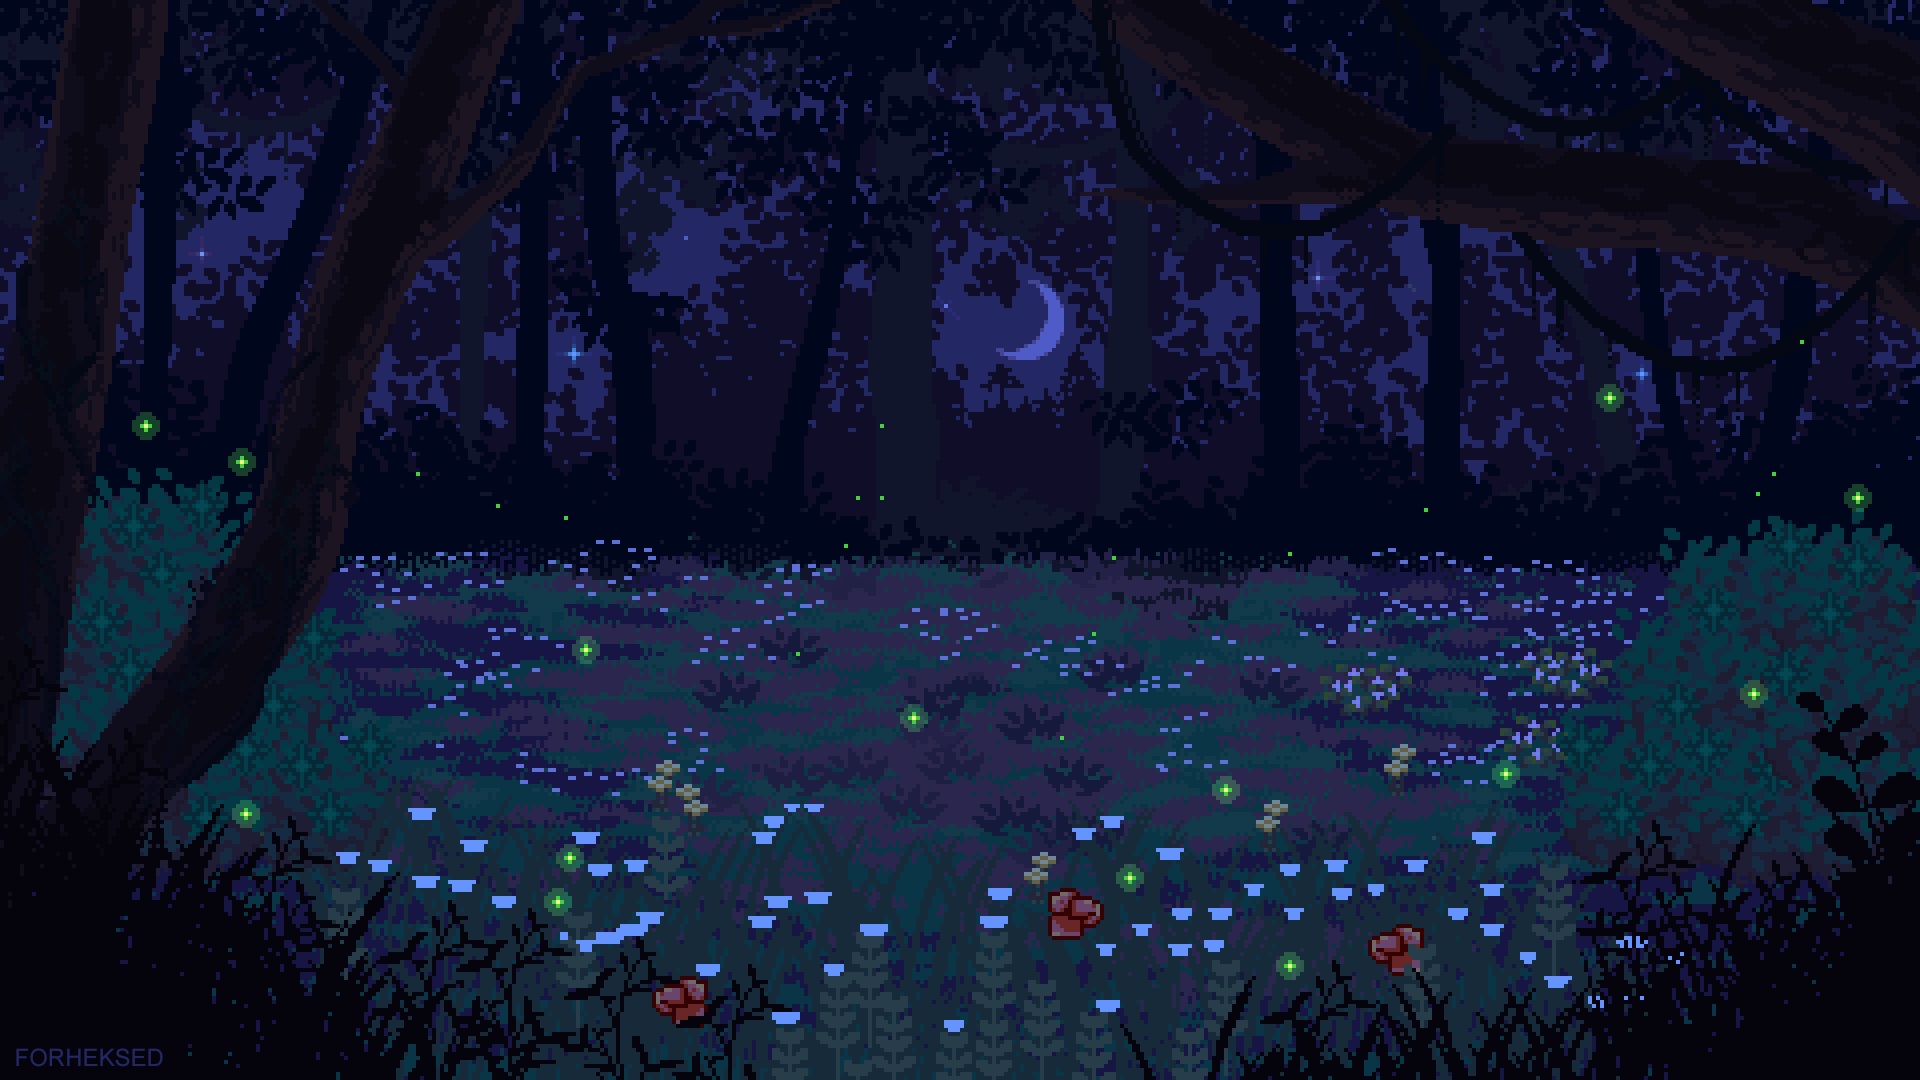 Pixel Art Nature Night Crescent Moon Flowers Bioluminescence Forest Clearing Forest Digital Art Ligh 1920x1080